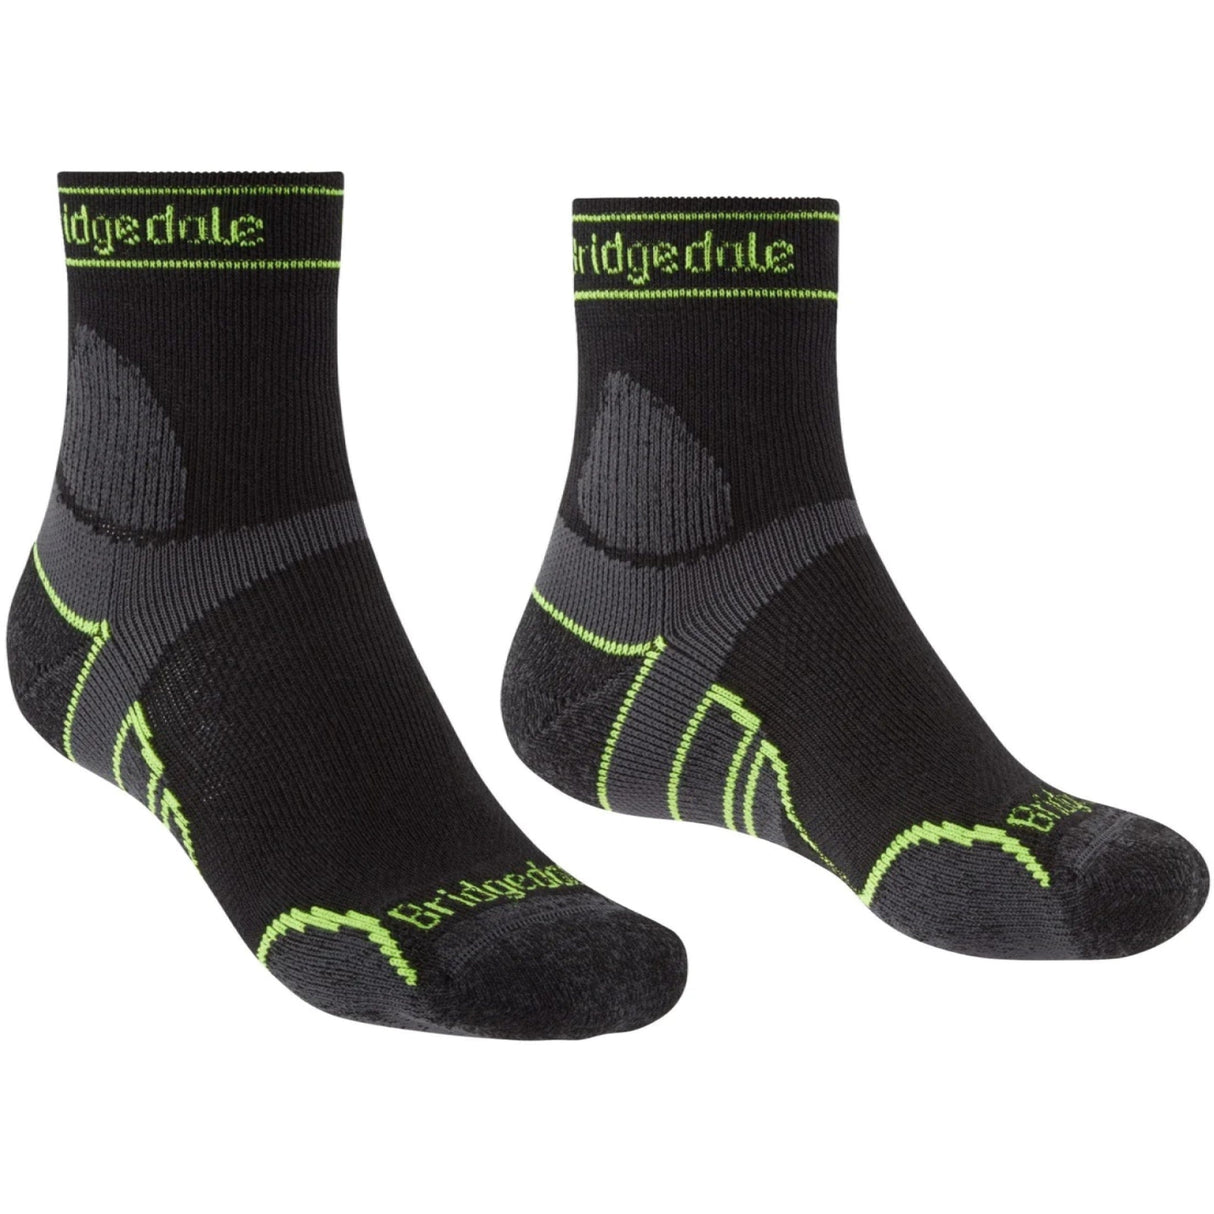 Bridgedale Mens Lightweight T2 Merino Sport 3/4 Crew Socks  -  Medium / Black